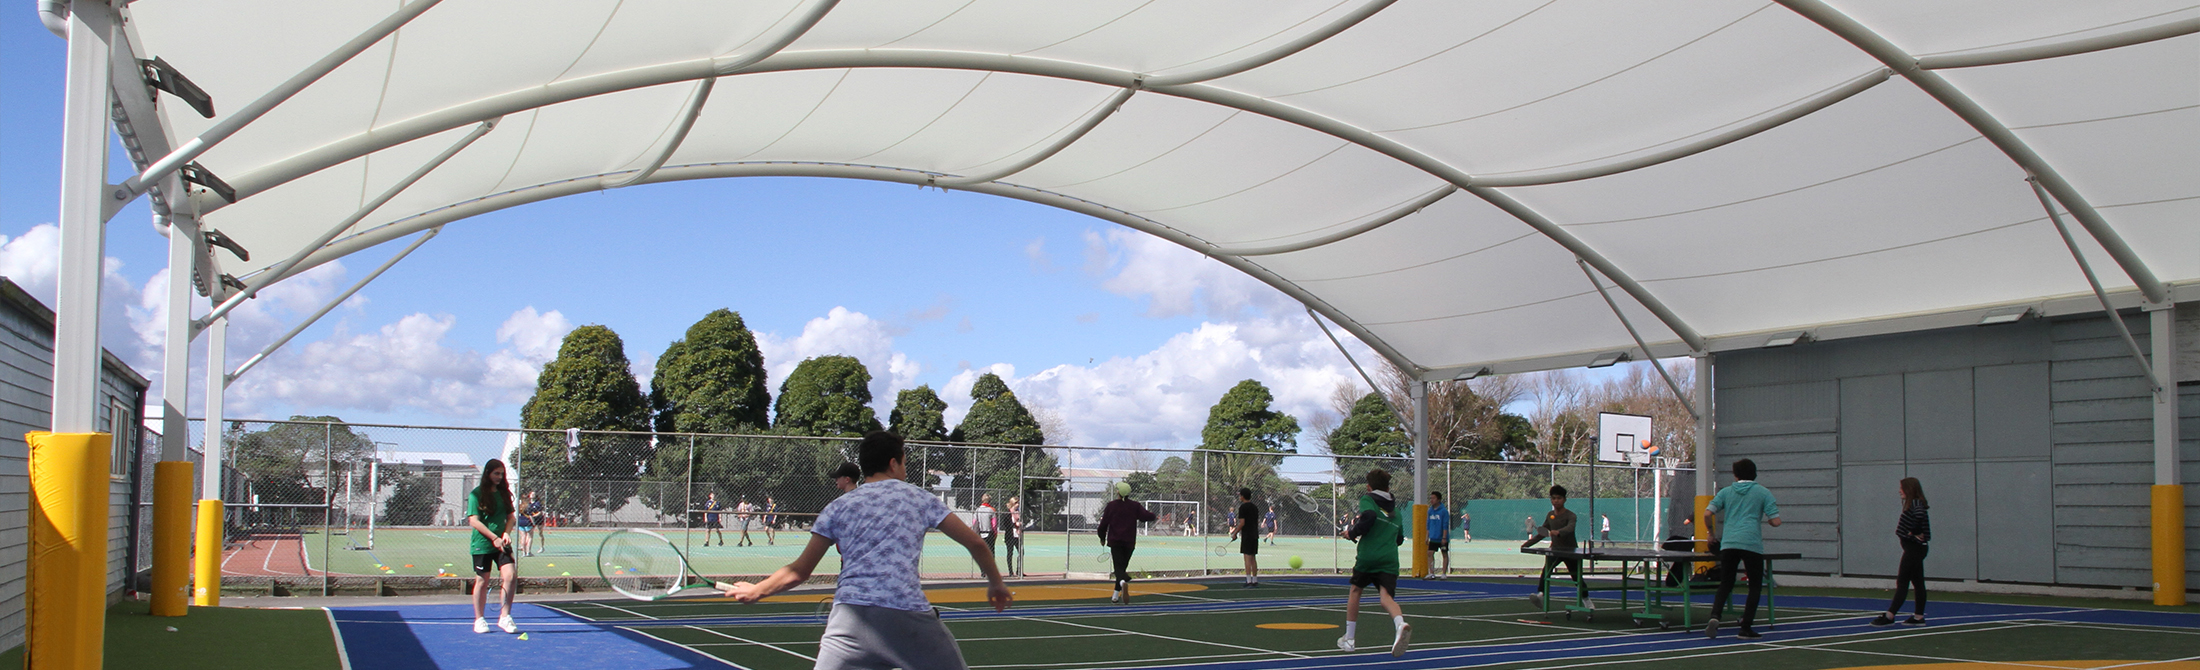 MUGA Tennis Court Canopy